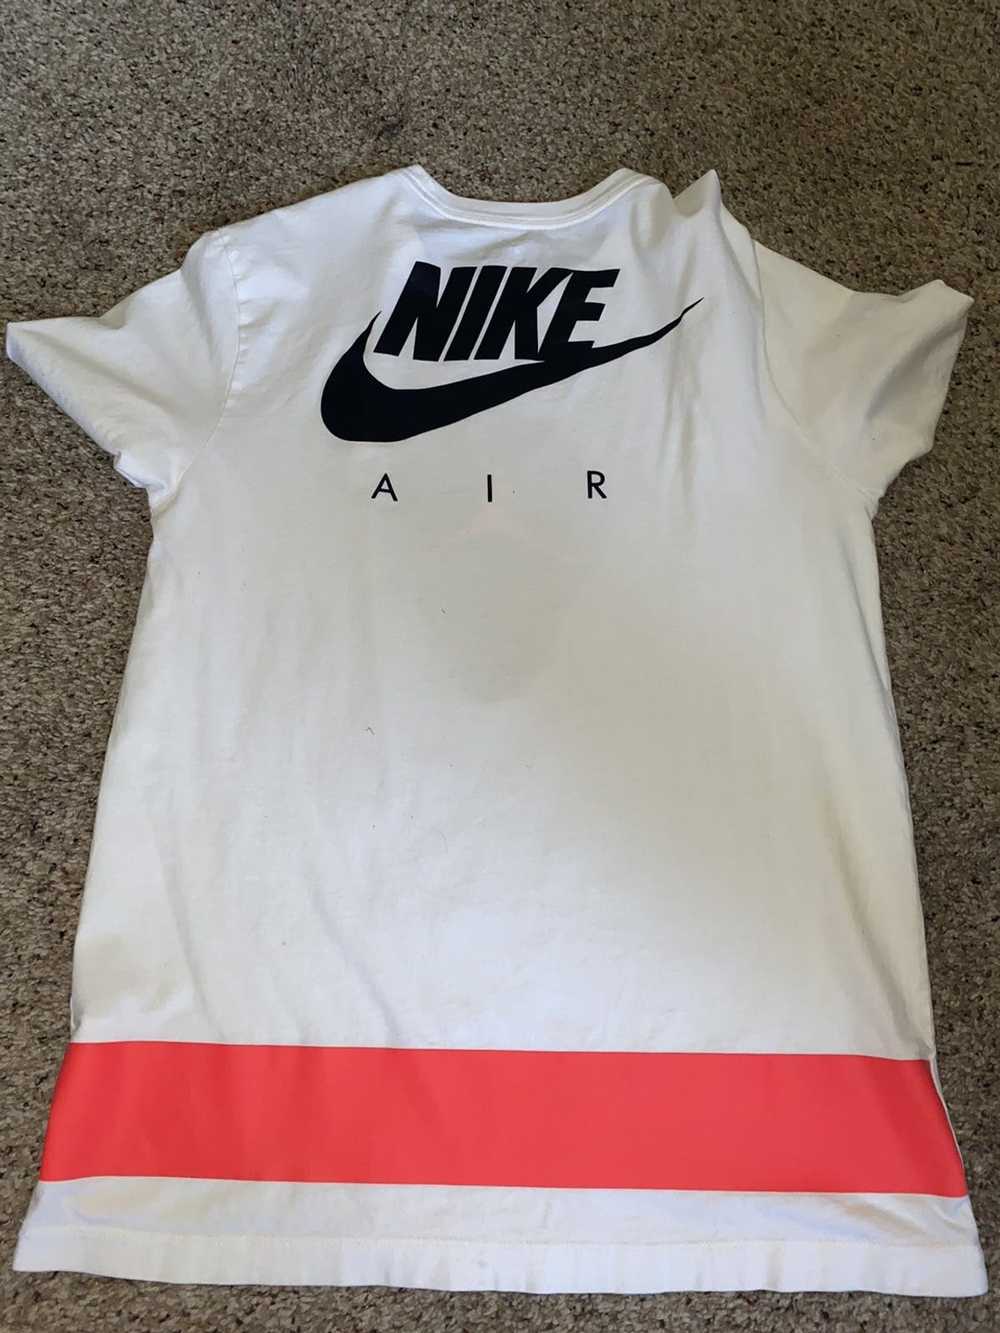 Jordan Brand × Nike Nike Air Jordan T shirt - image 3